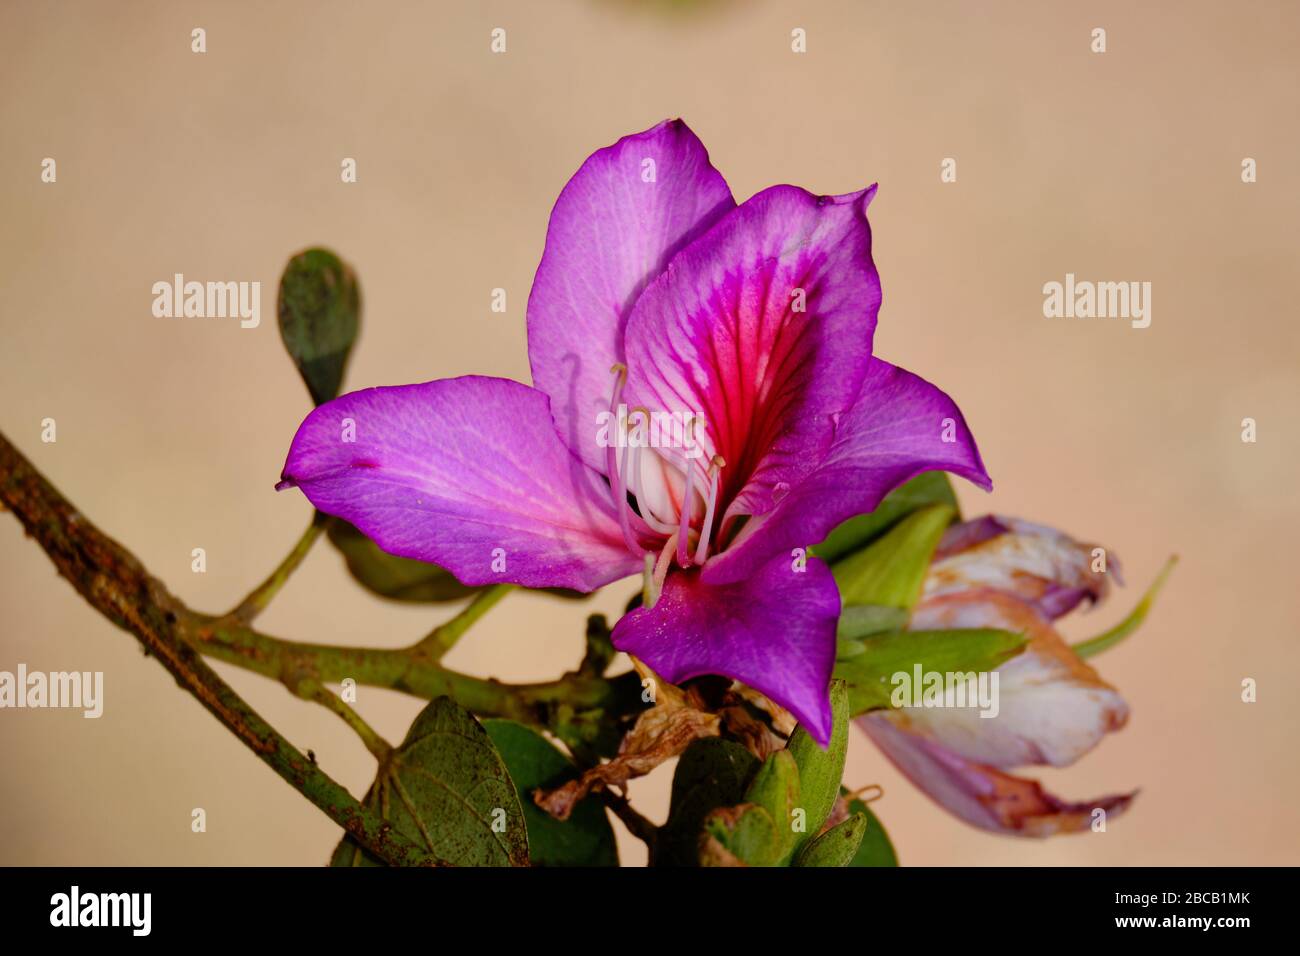 Bauhinia variegata, flowering plant in the legume family Fabaceae. Stock Photo